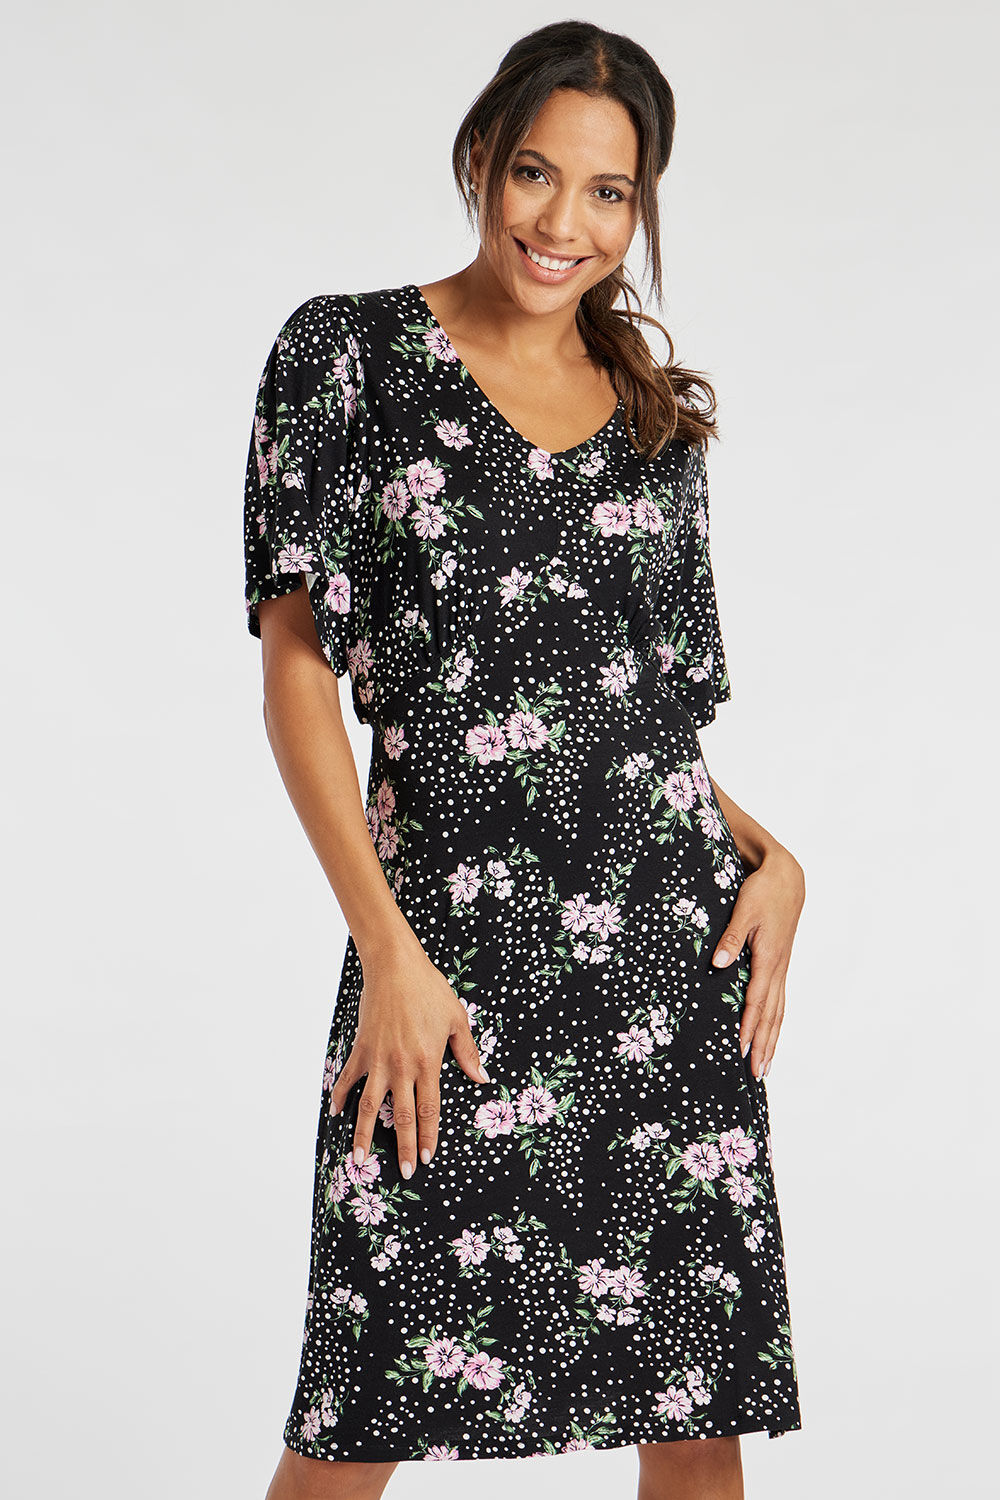 Bonmarche Black Floral Spot Print Jersey Tea Dress, Size: 18